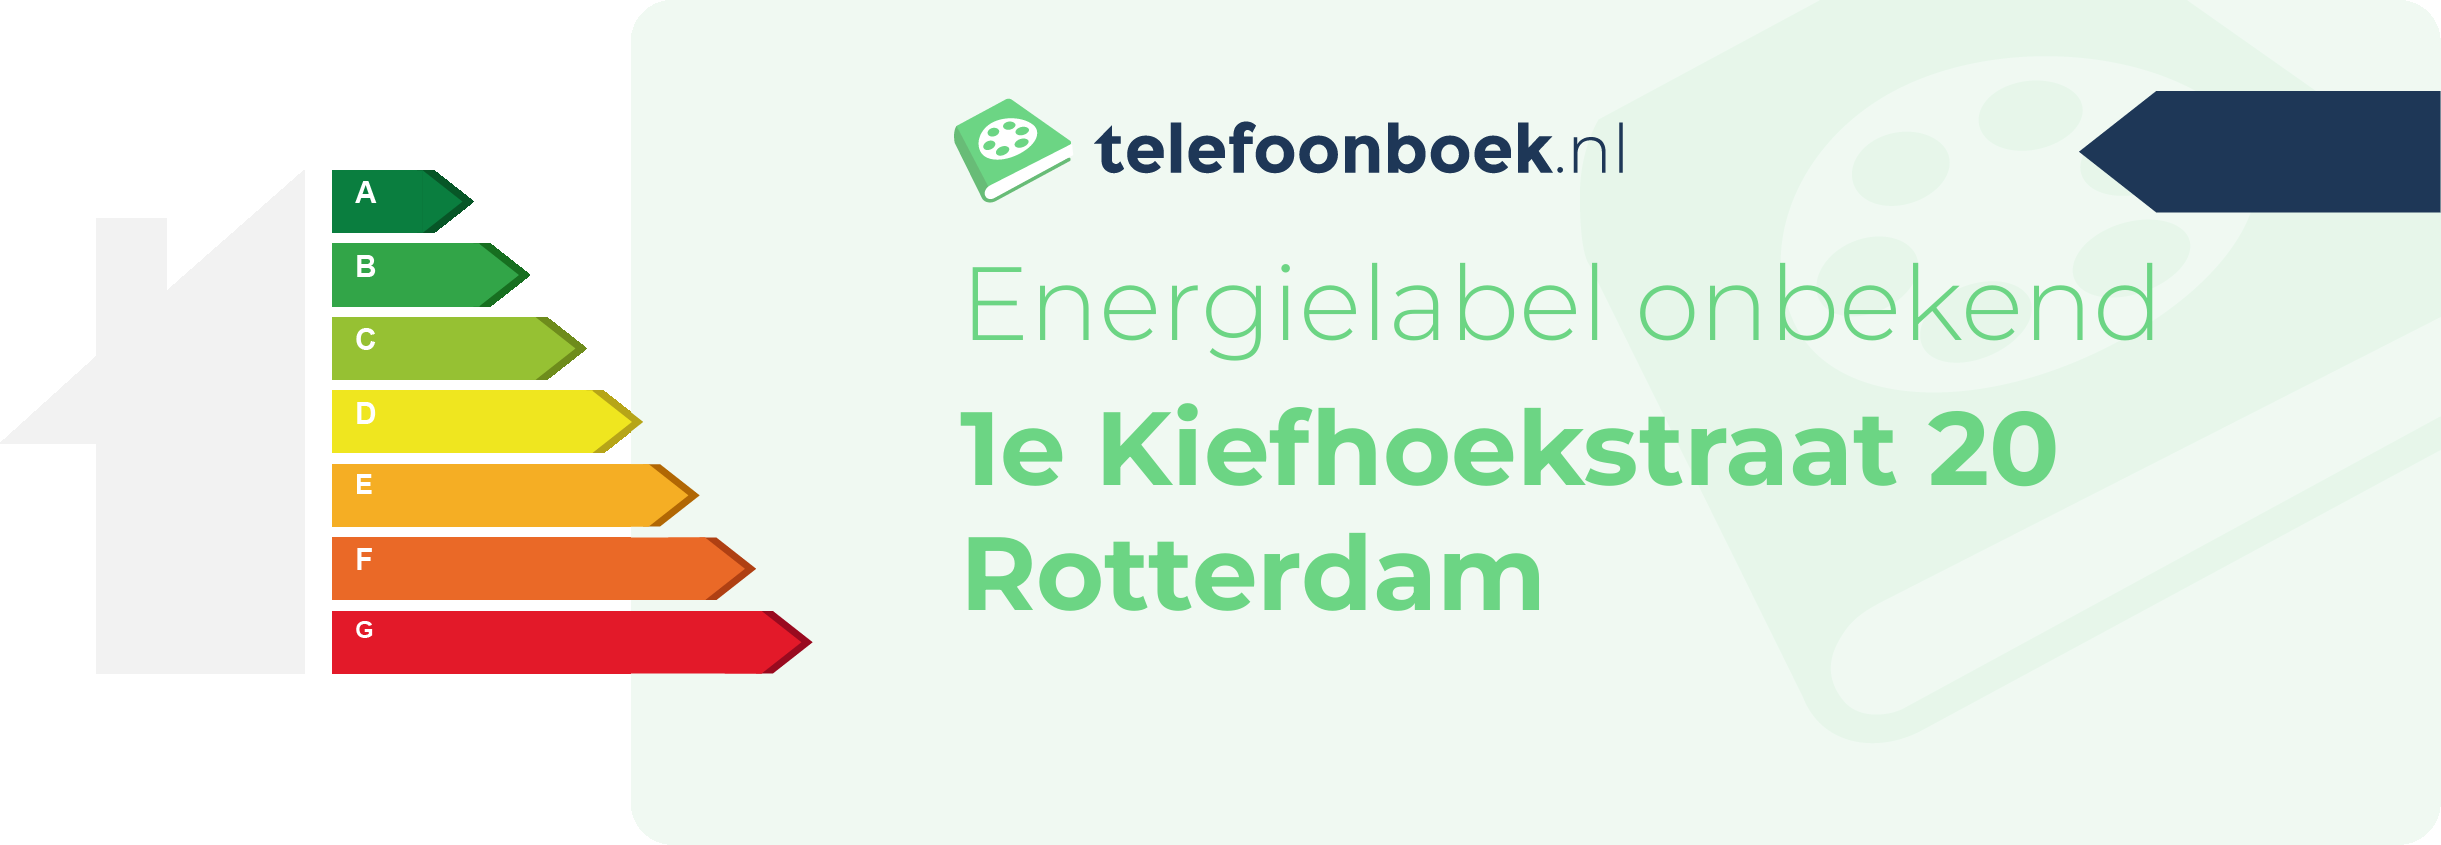 Energielabel 1e Kiefhoekstraat 20 Rotterdam